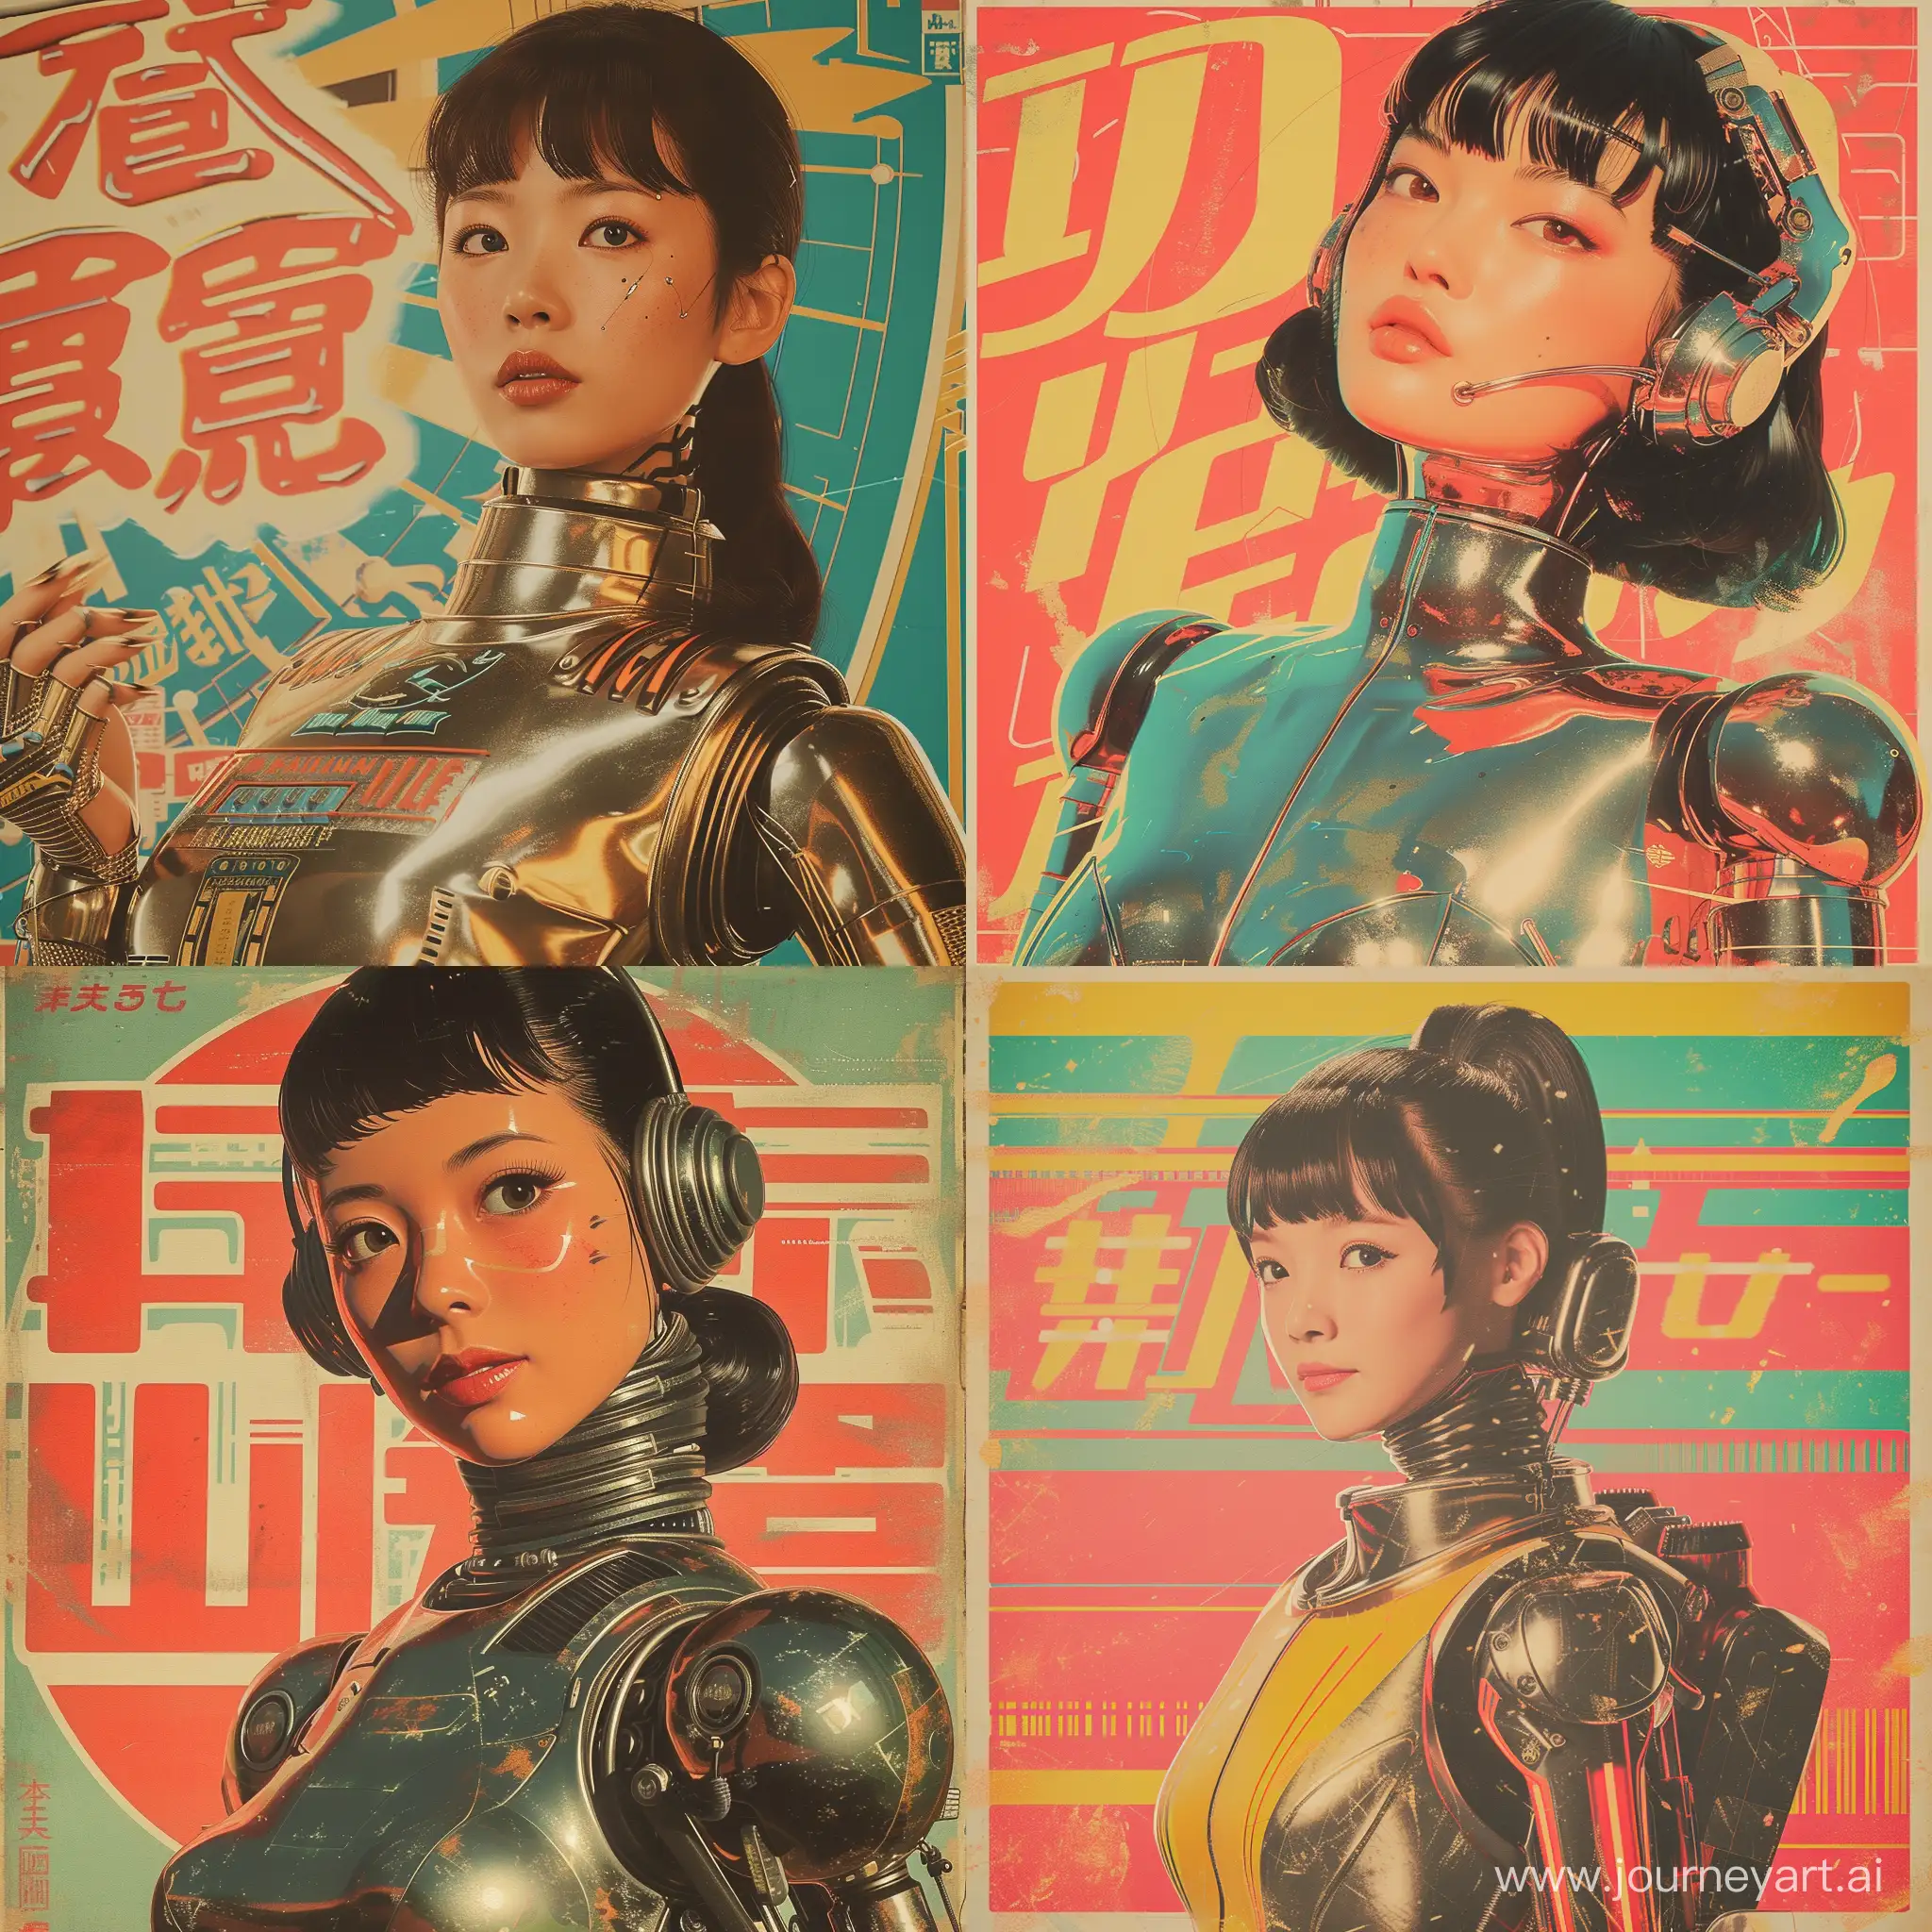 Retro-Bionic-Asian-Bombshell-Japanese-Pulp-Poster-Art-by-Hajime-Sorayama